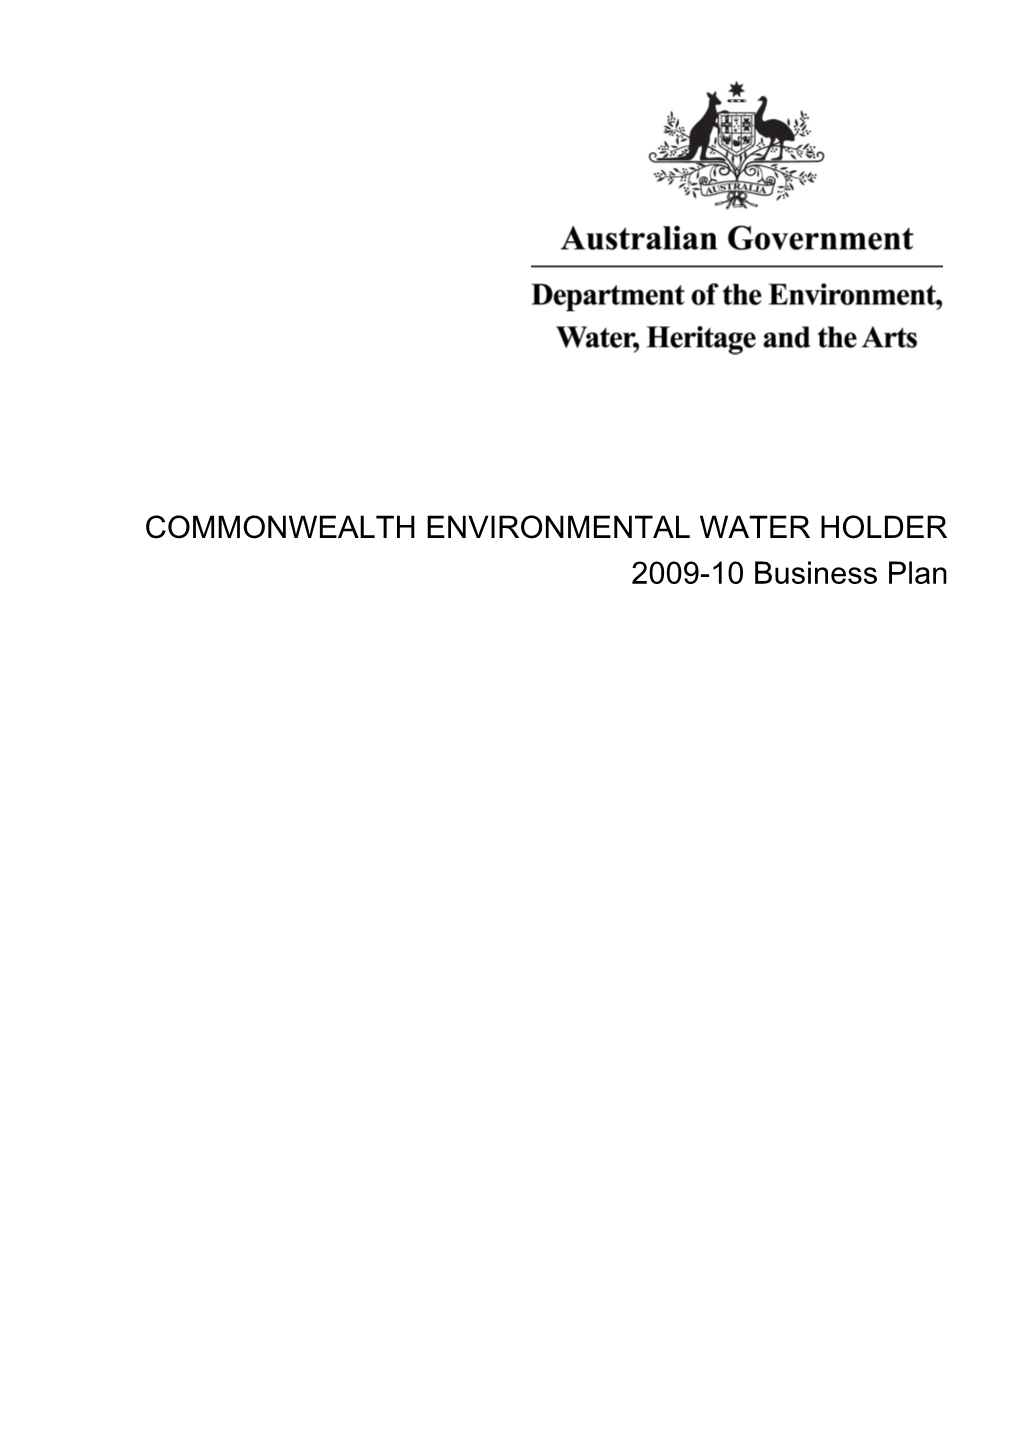 Commonwealth Environmental Water Holder 2009-10 Business Plan